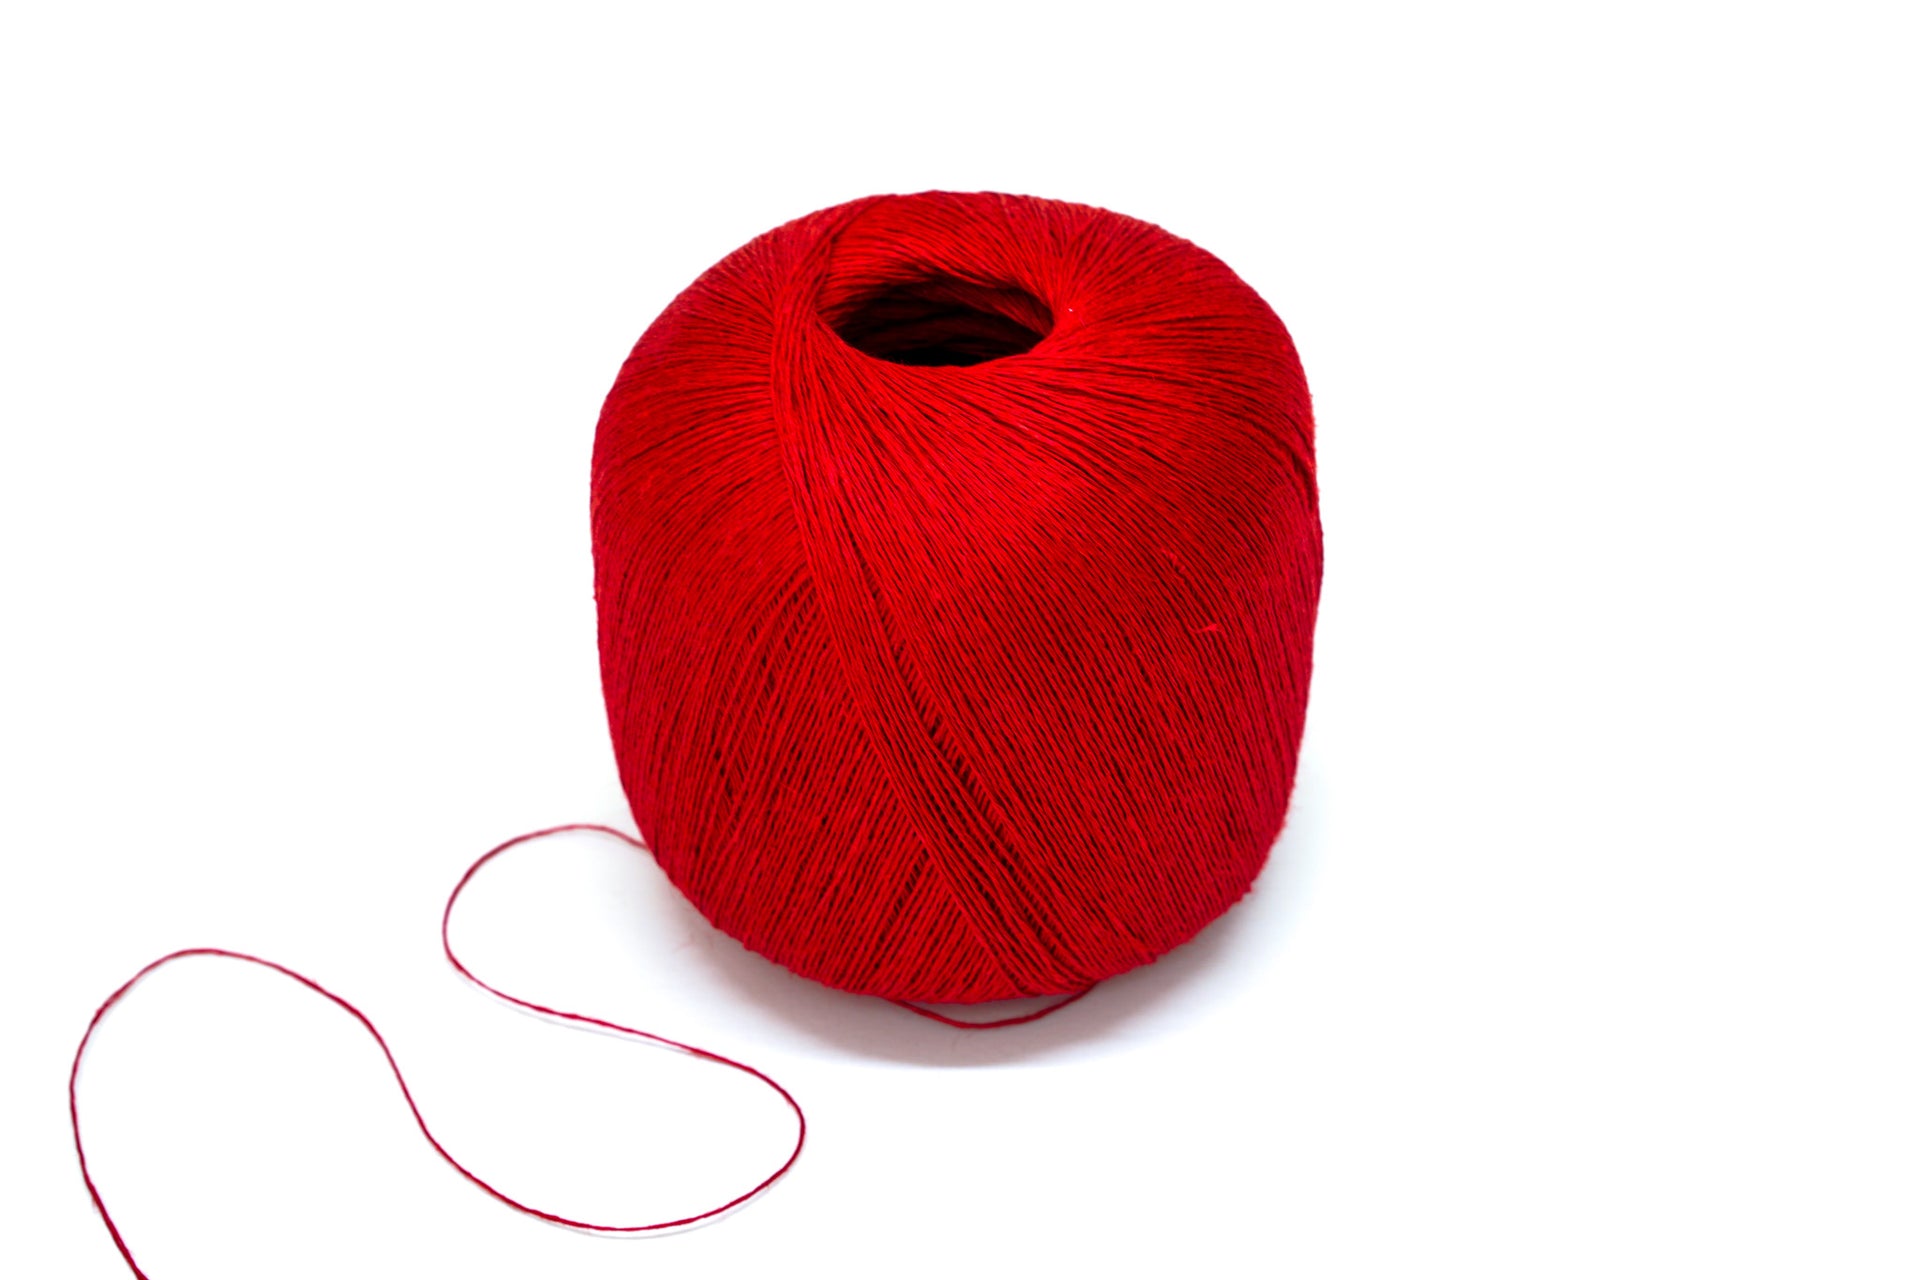 Linen Yarn in Red Color | YARN HOME Yarn Home